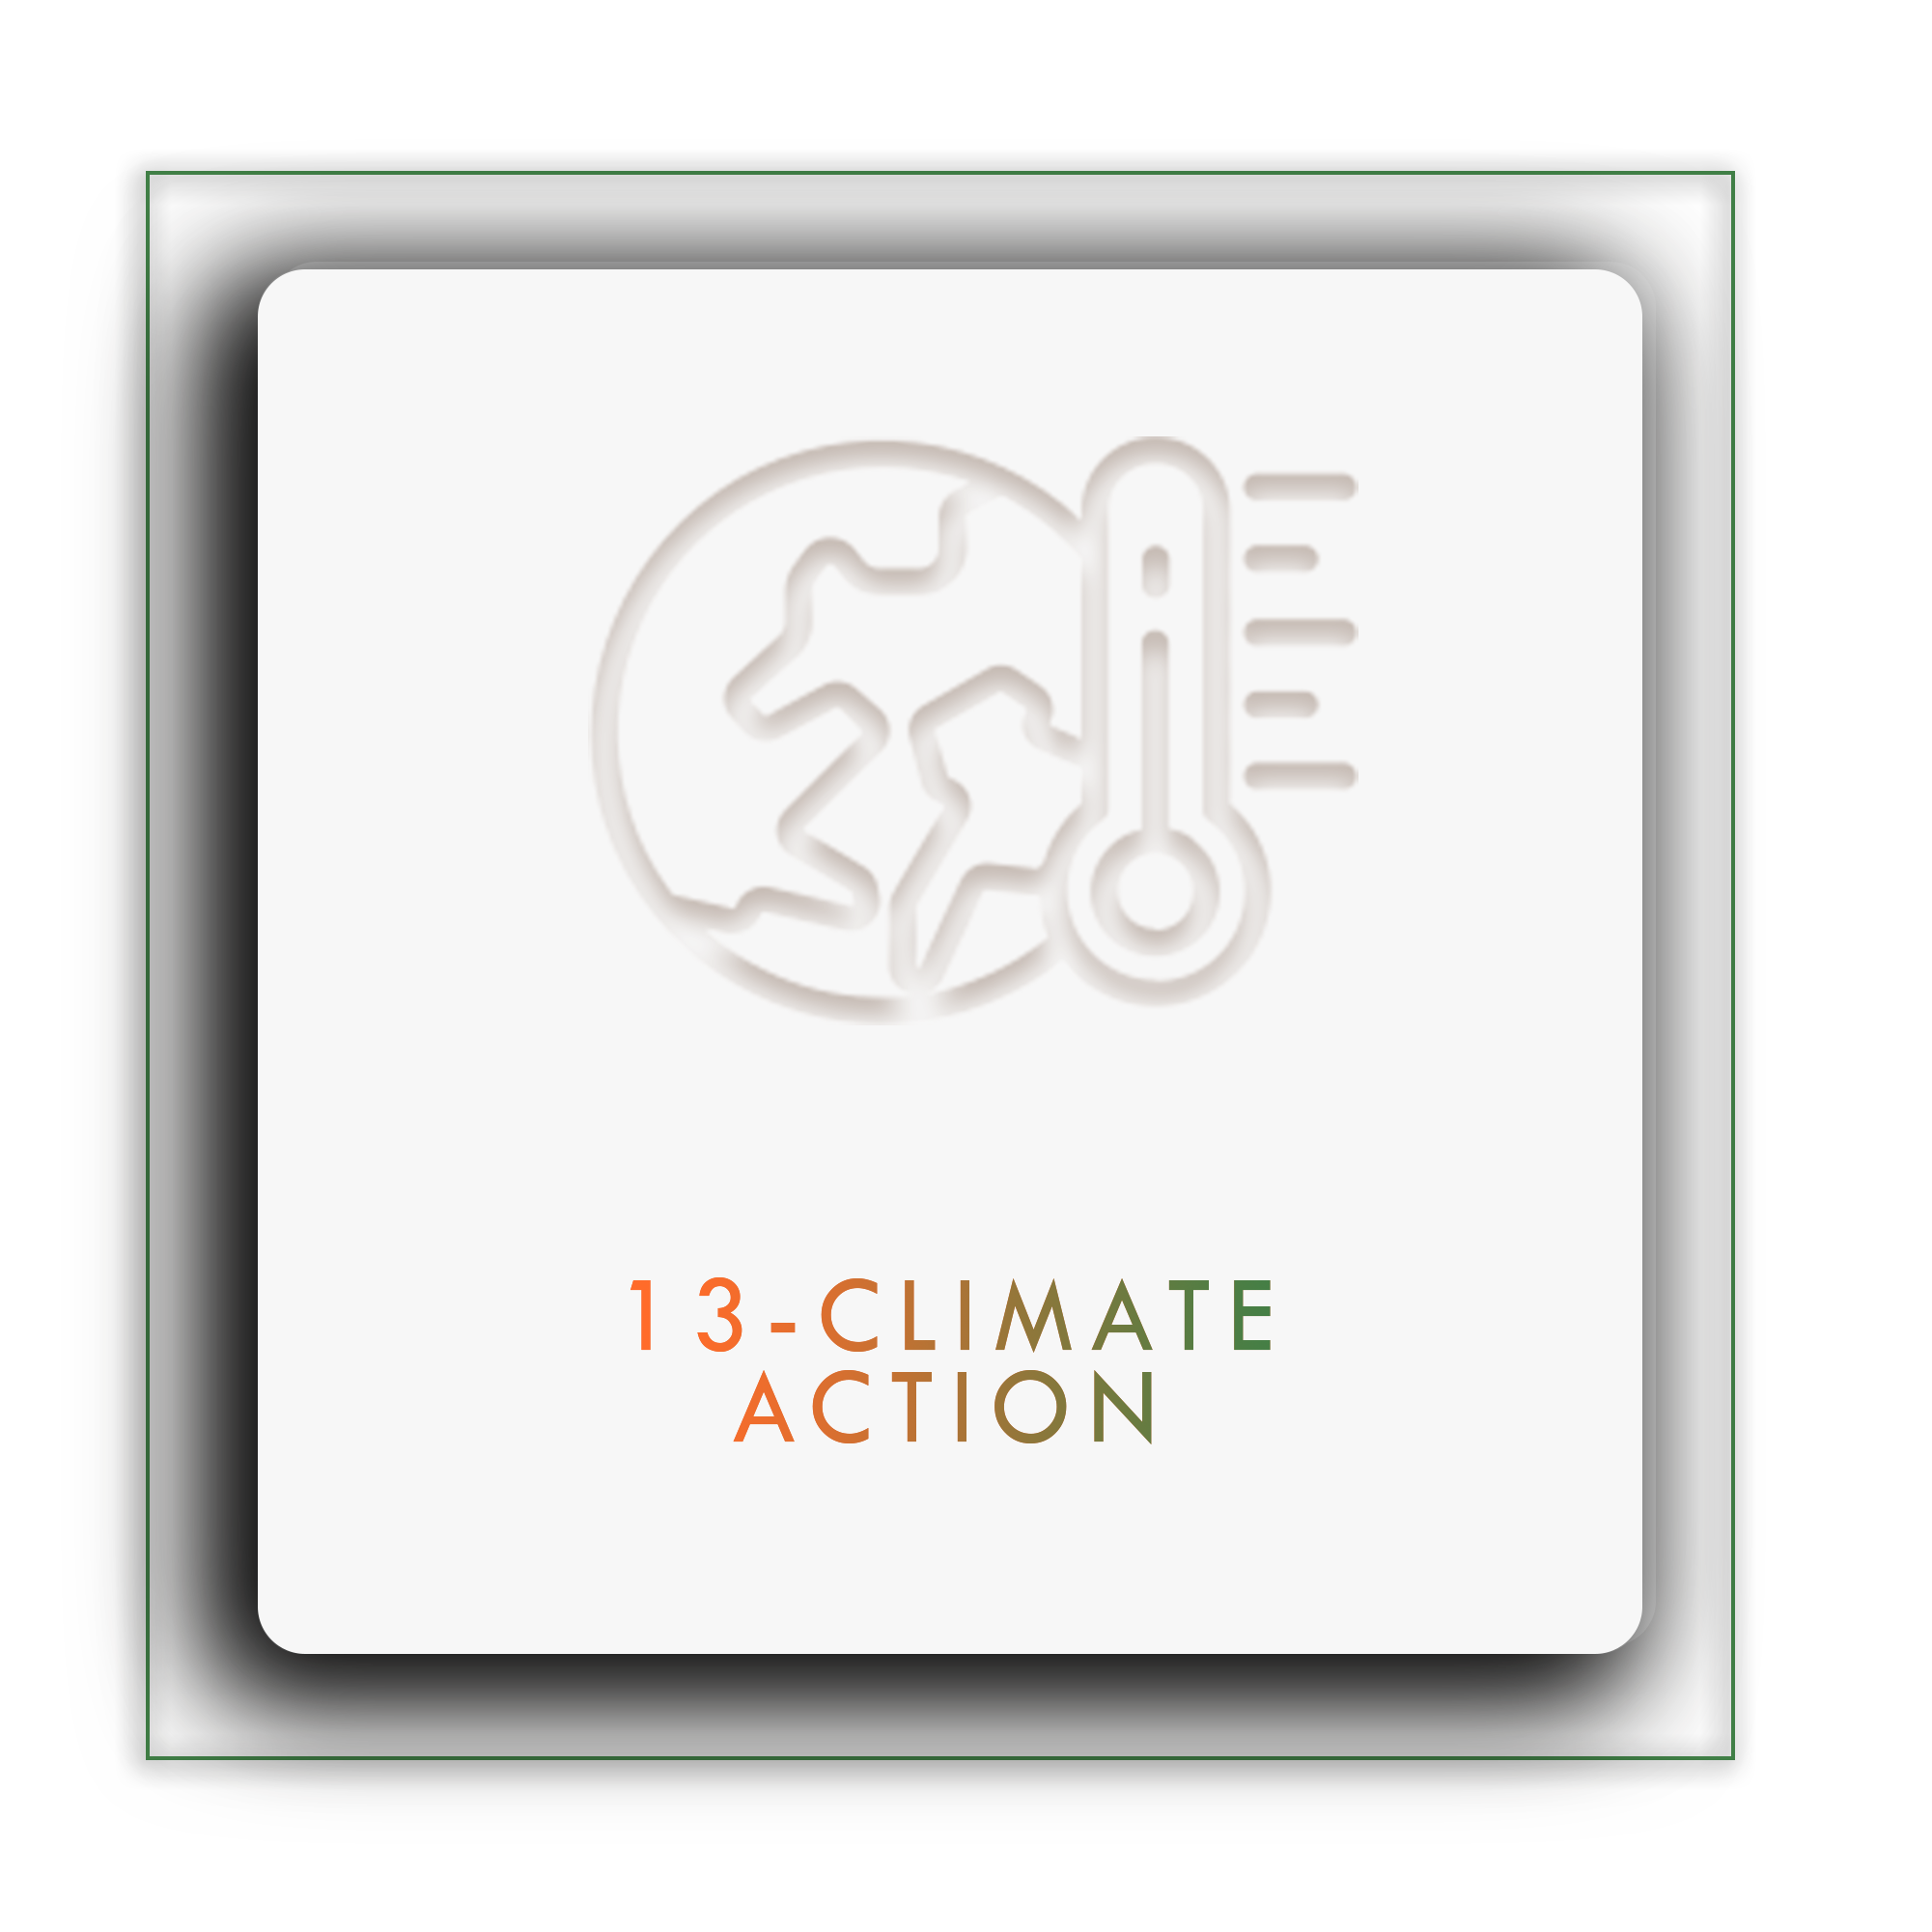 13-ClimateAction.png